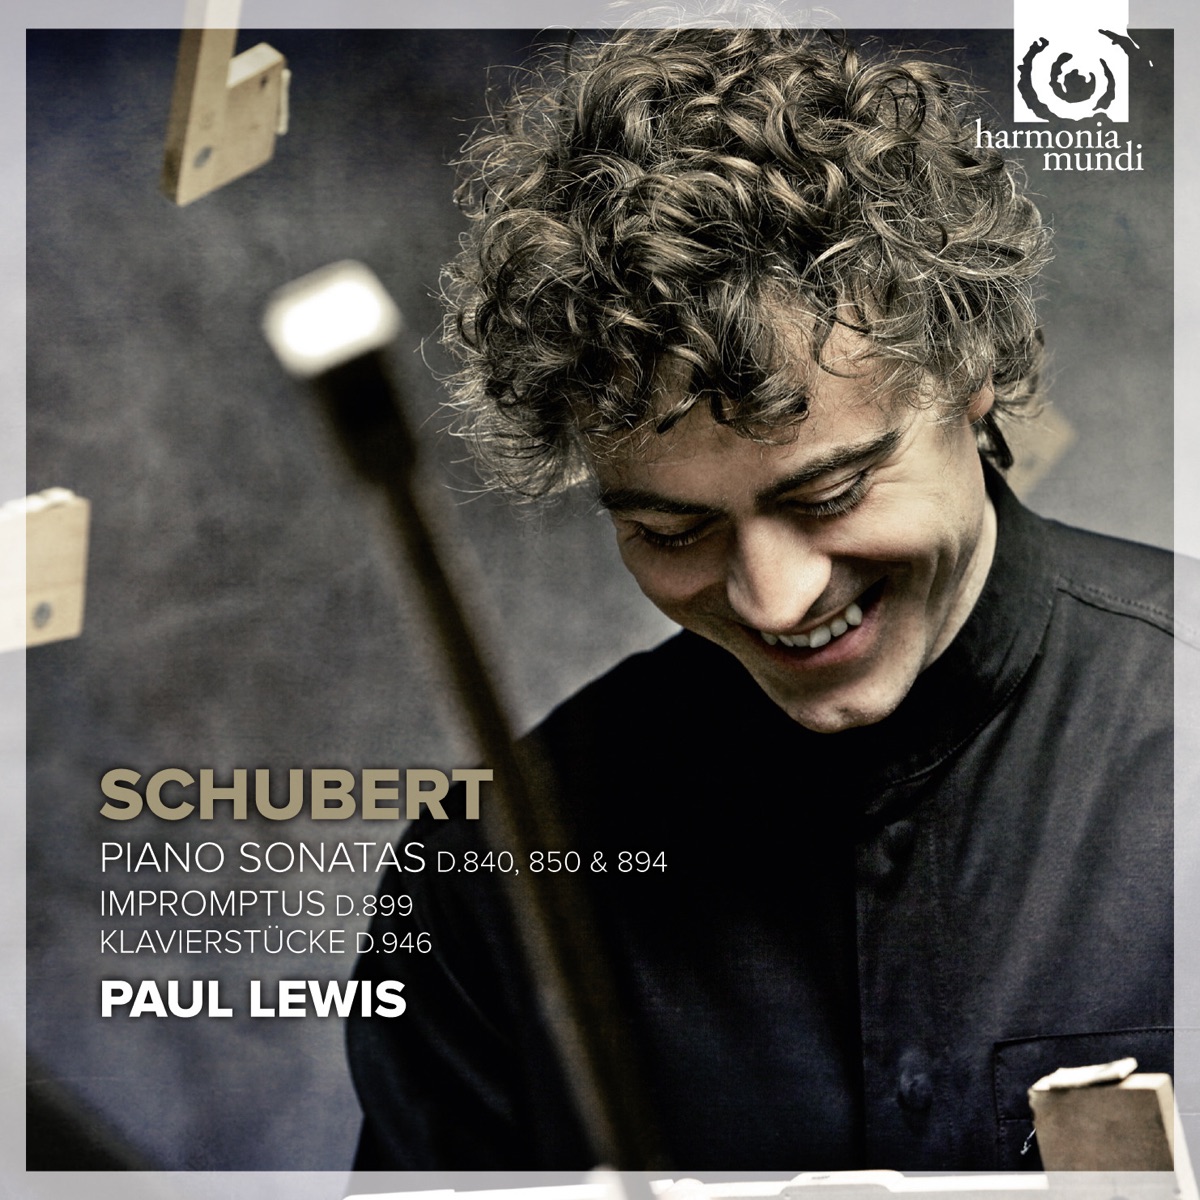 Schubert: Piano Sonatas, D. 840, 850 & 894 - Album by Paul Lewis - Apple  Music